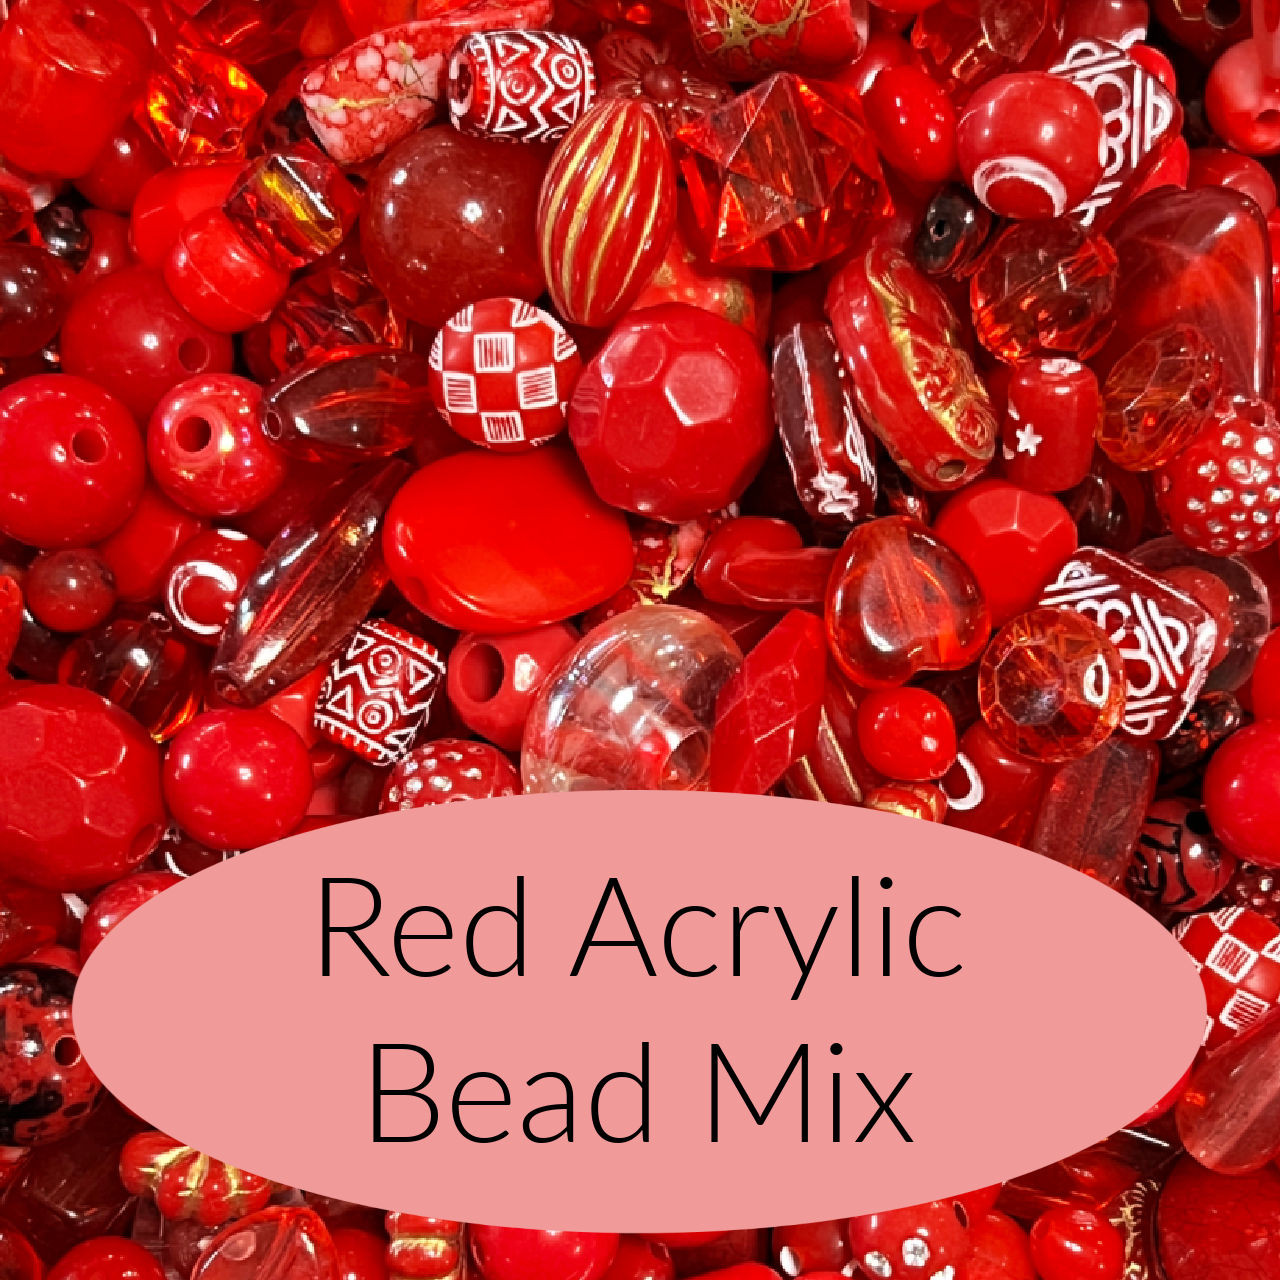 Red Acrylic Bead Mix